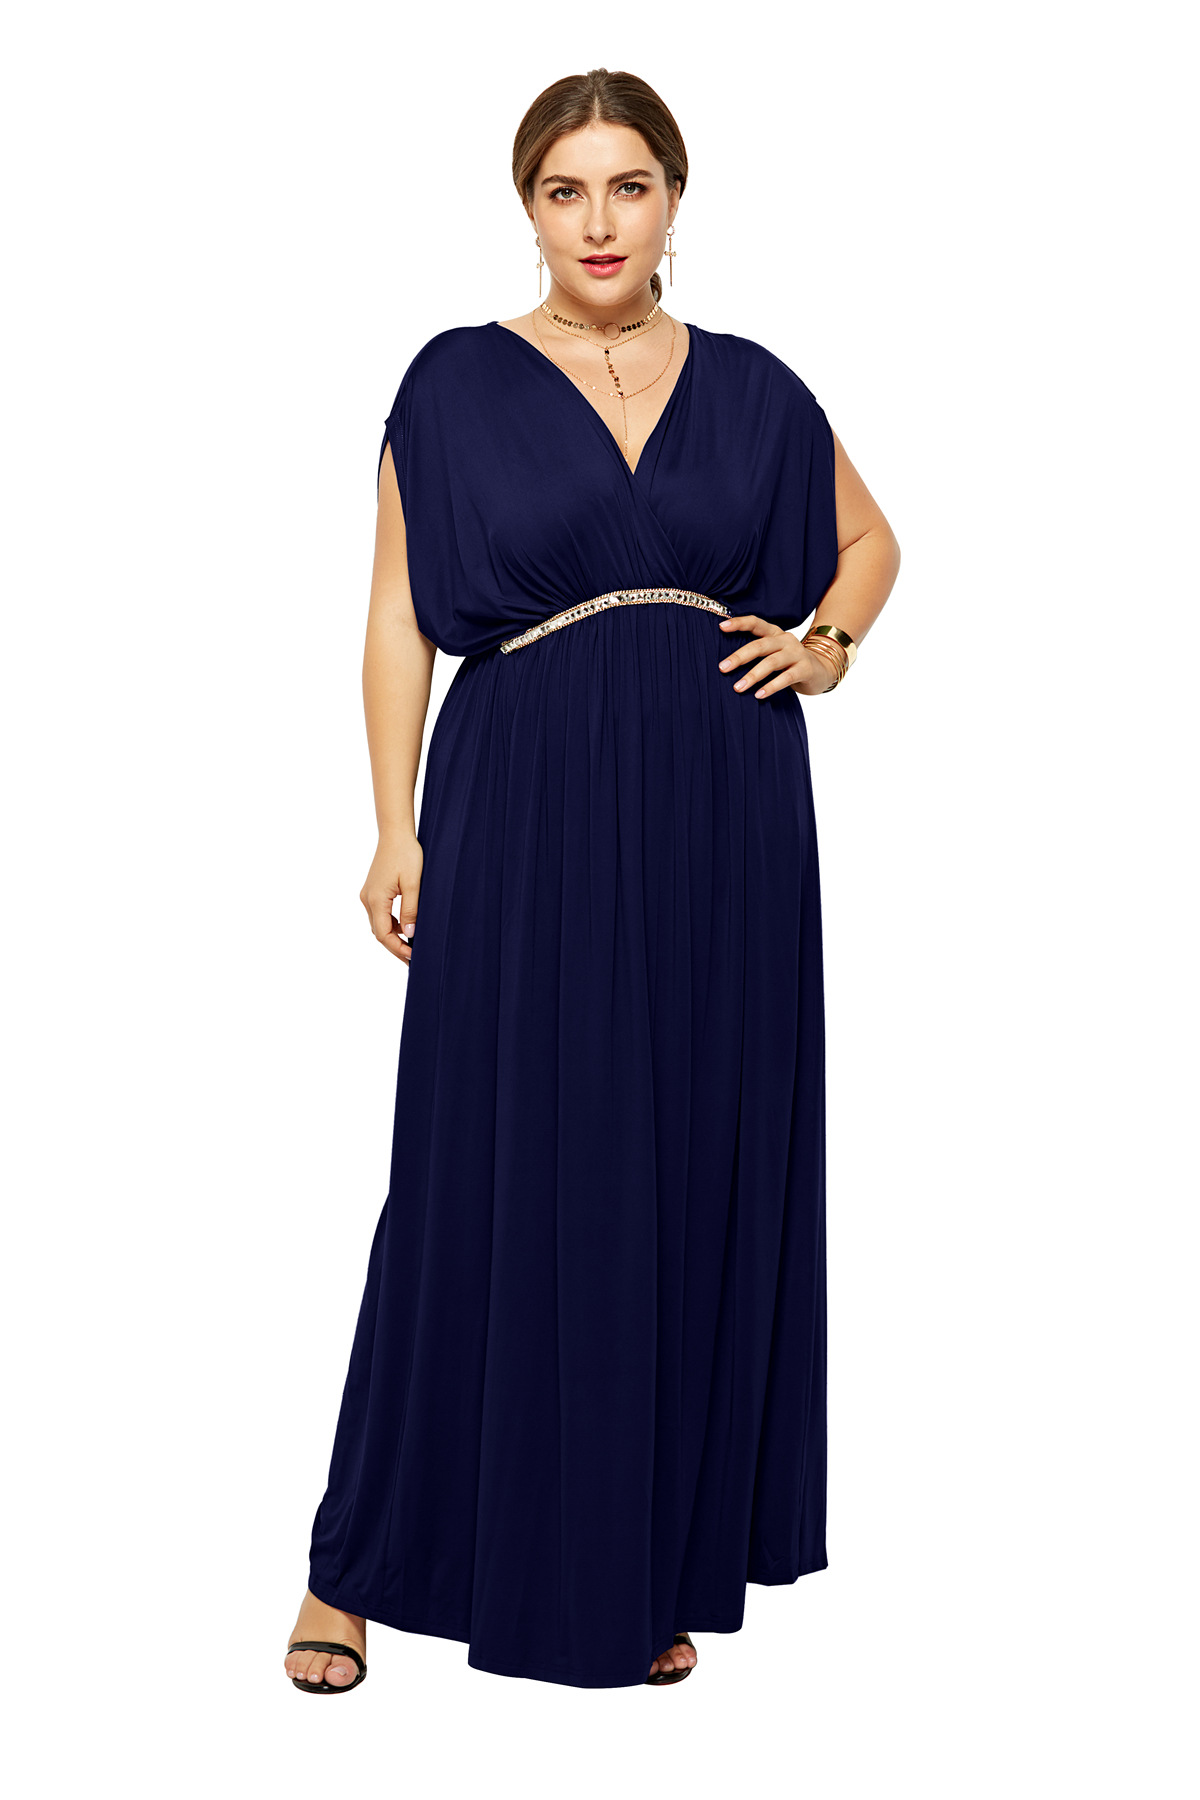  Plus Size Women Maxi Dress V Neck Summer Short Sleeve Long Formal Evening Party Dress navy blue